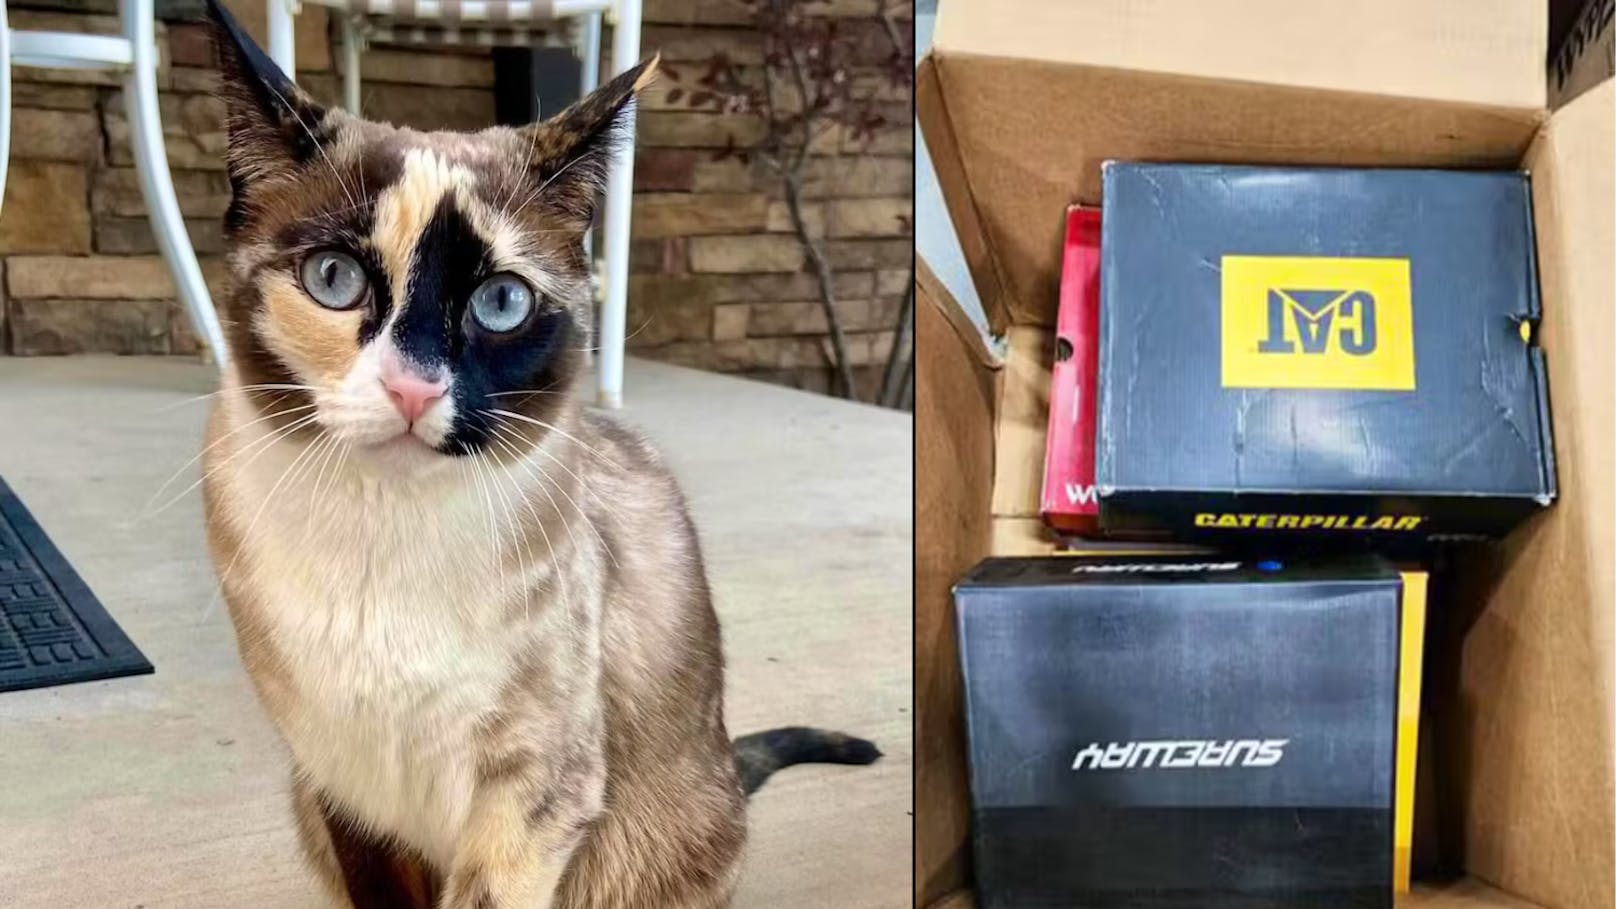 Katze weg – 1.000 Km entfernt in Amazon-Paket gefunden